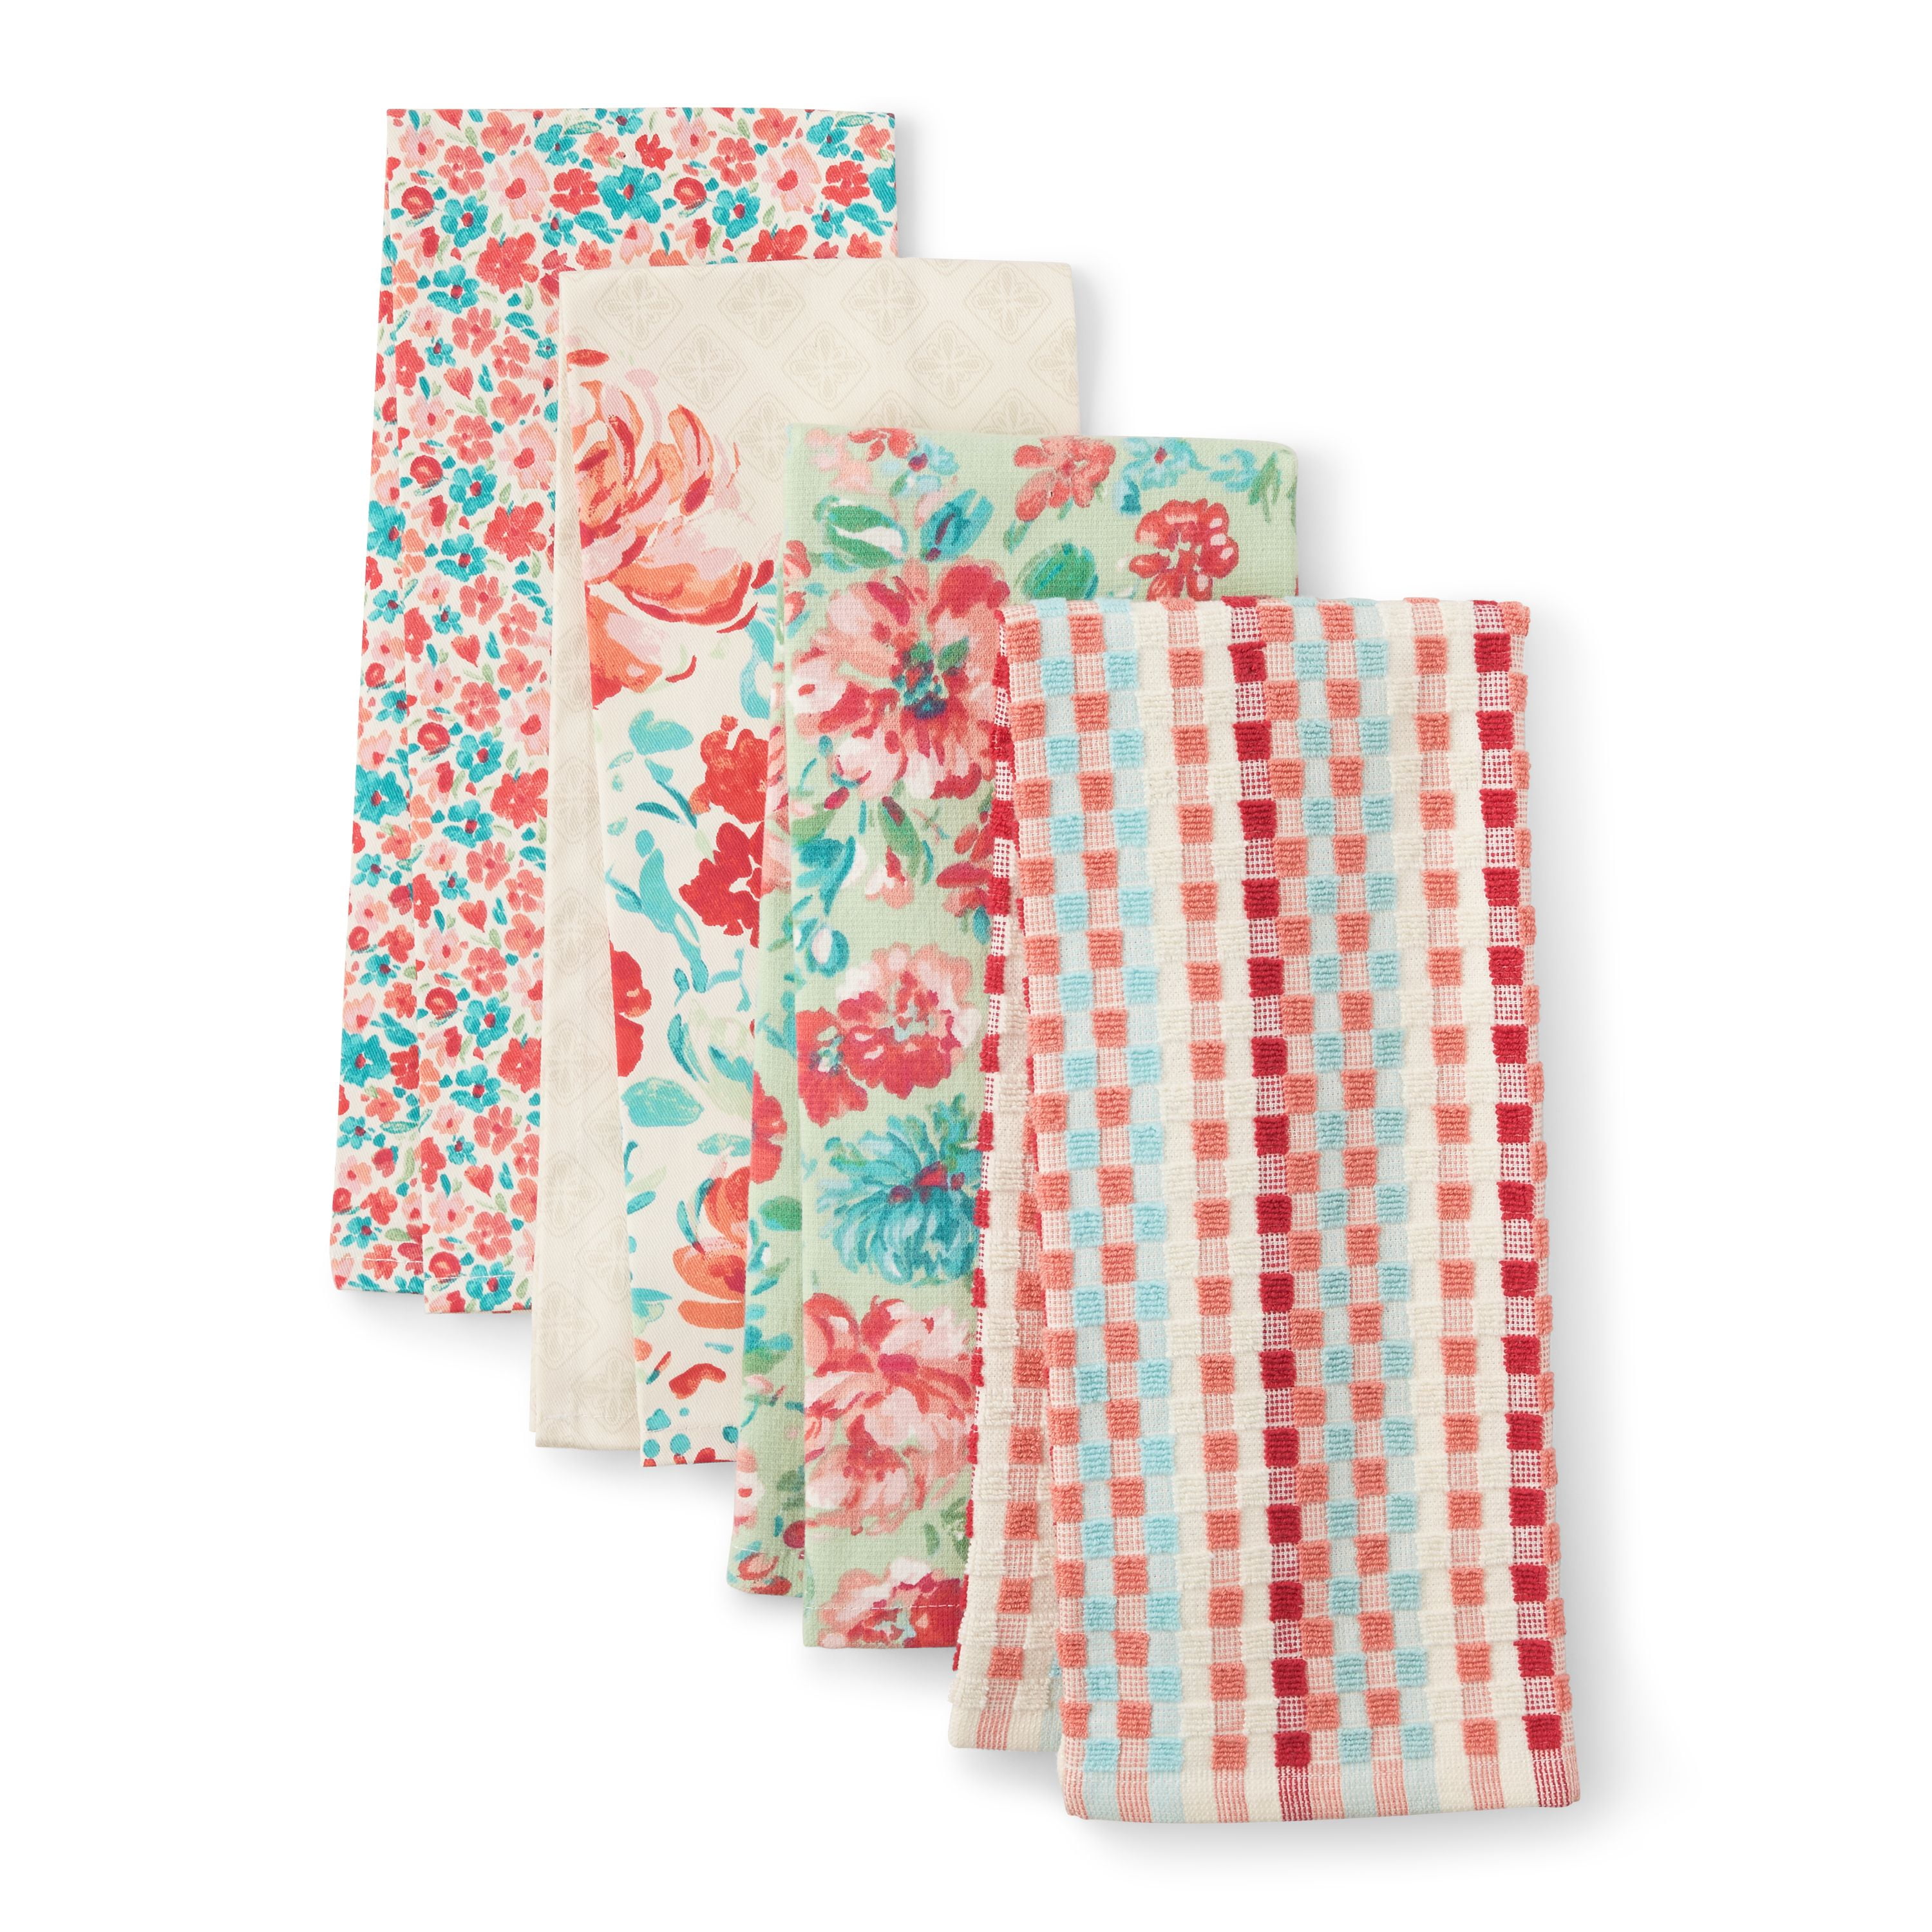 Set Pioneer Woman Crochet Top Kitchen Towels Sweet Romance Floral 4 Gray 